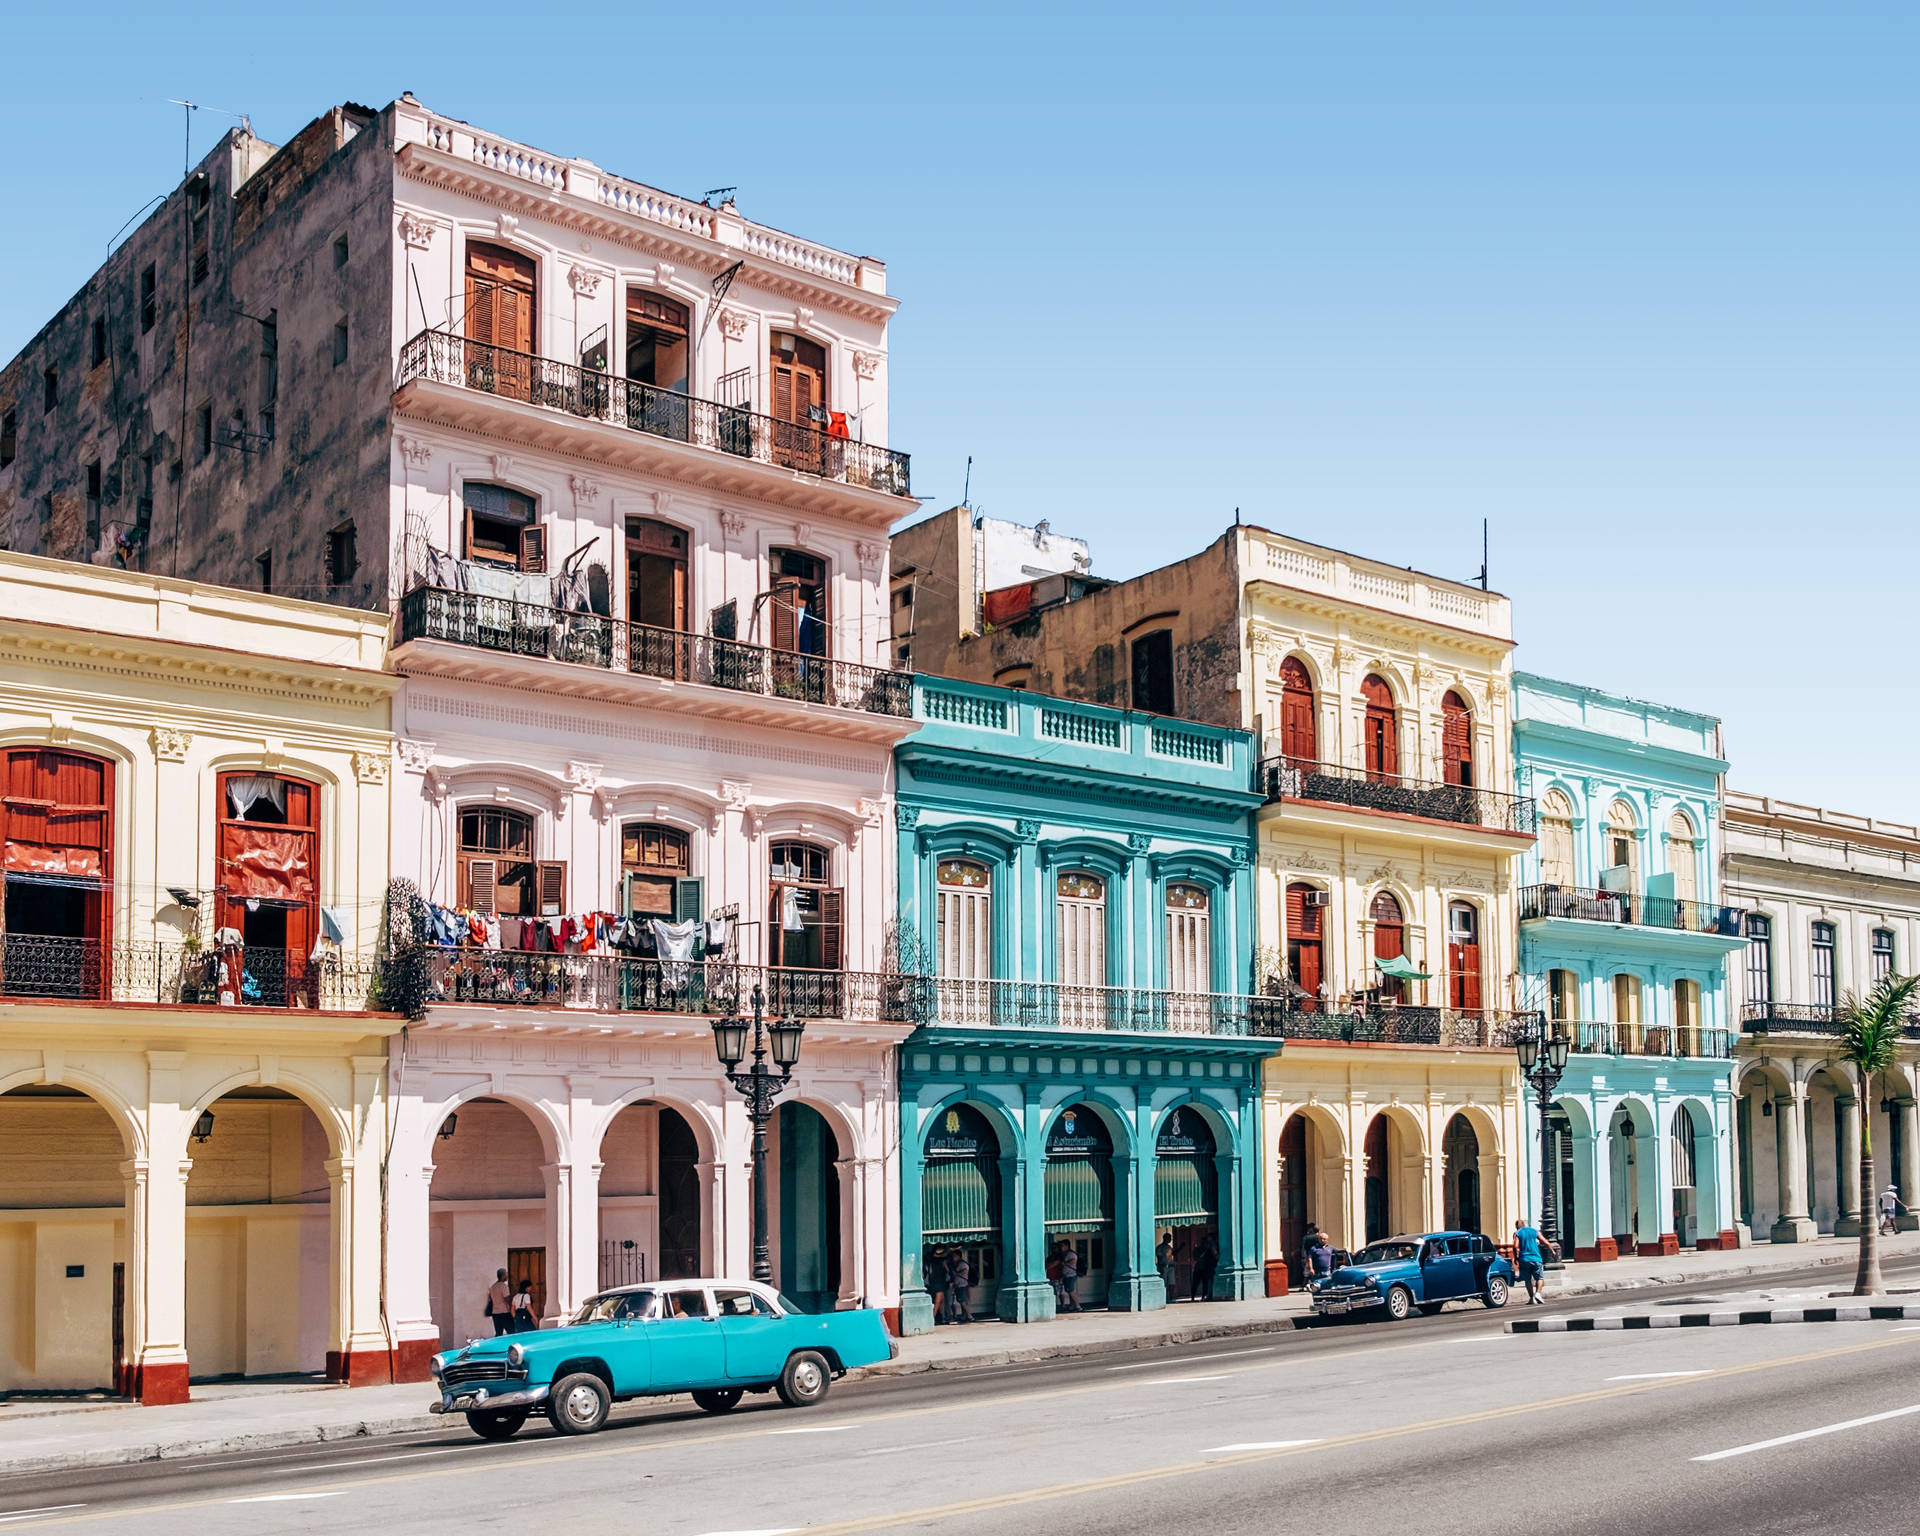 Architectural Buildings In Cuba Wallpaper